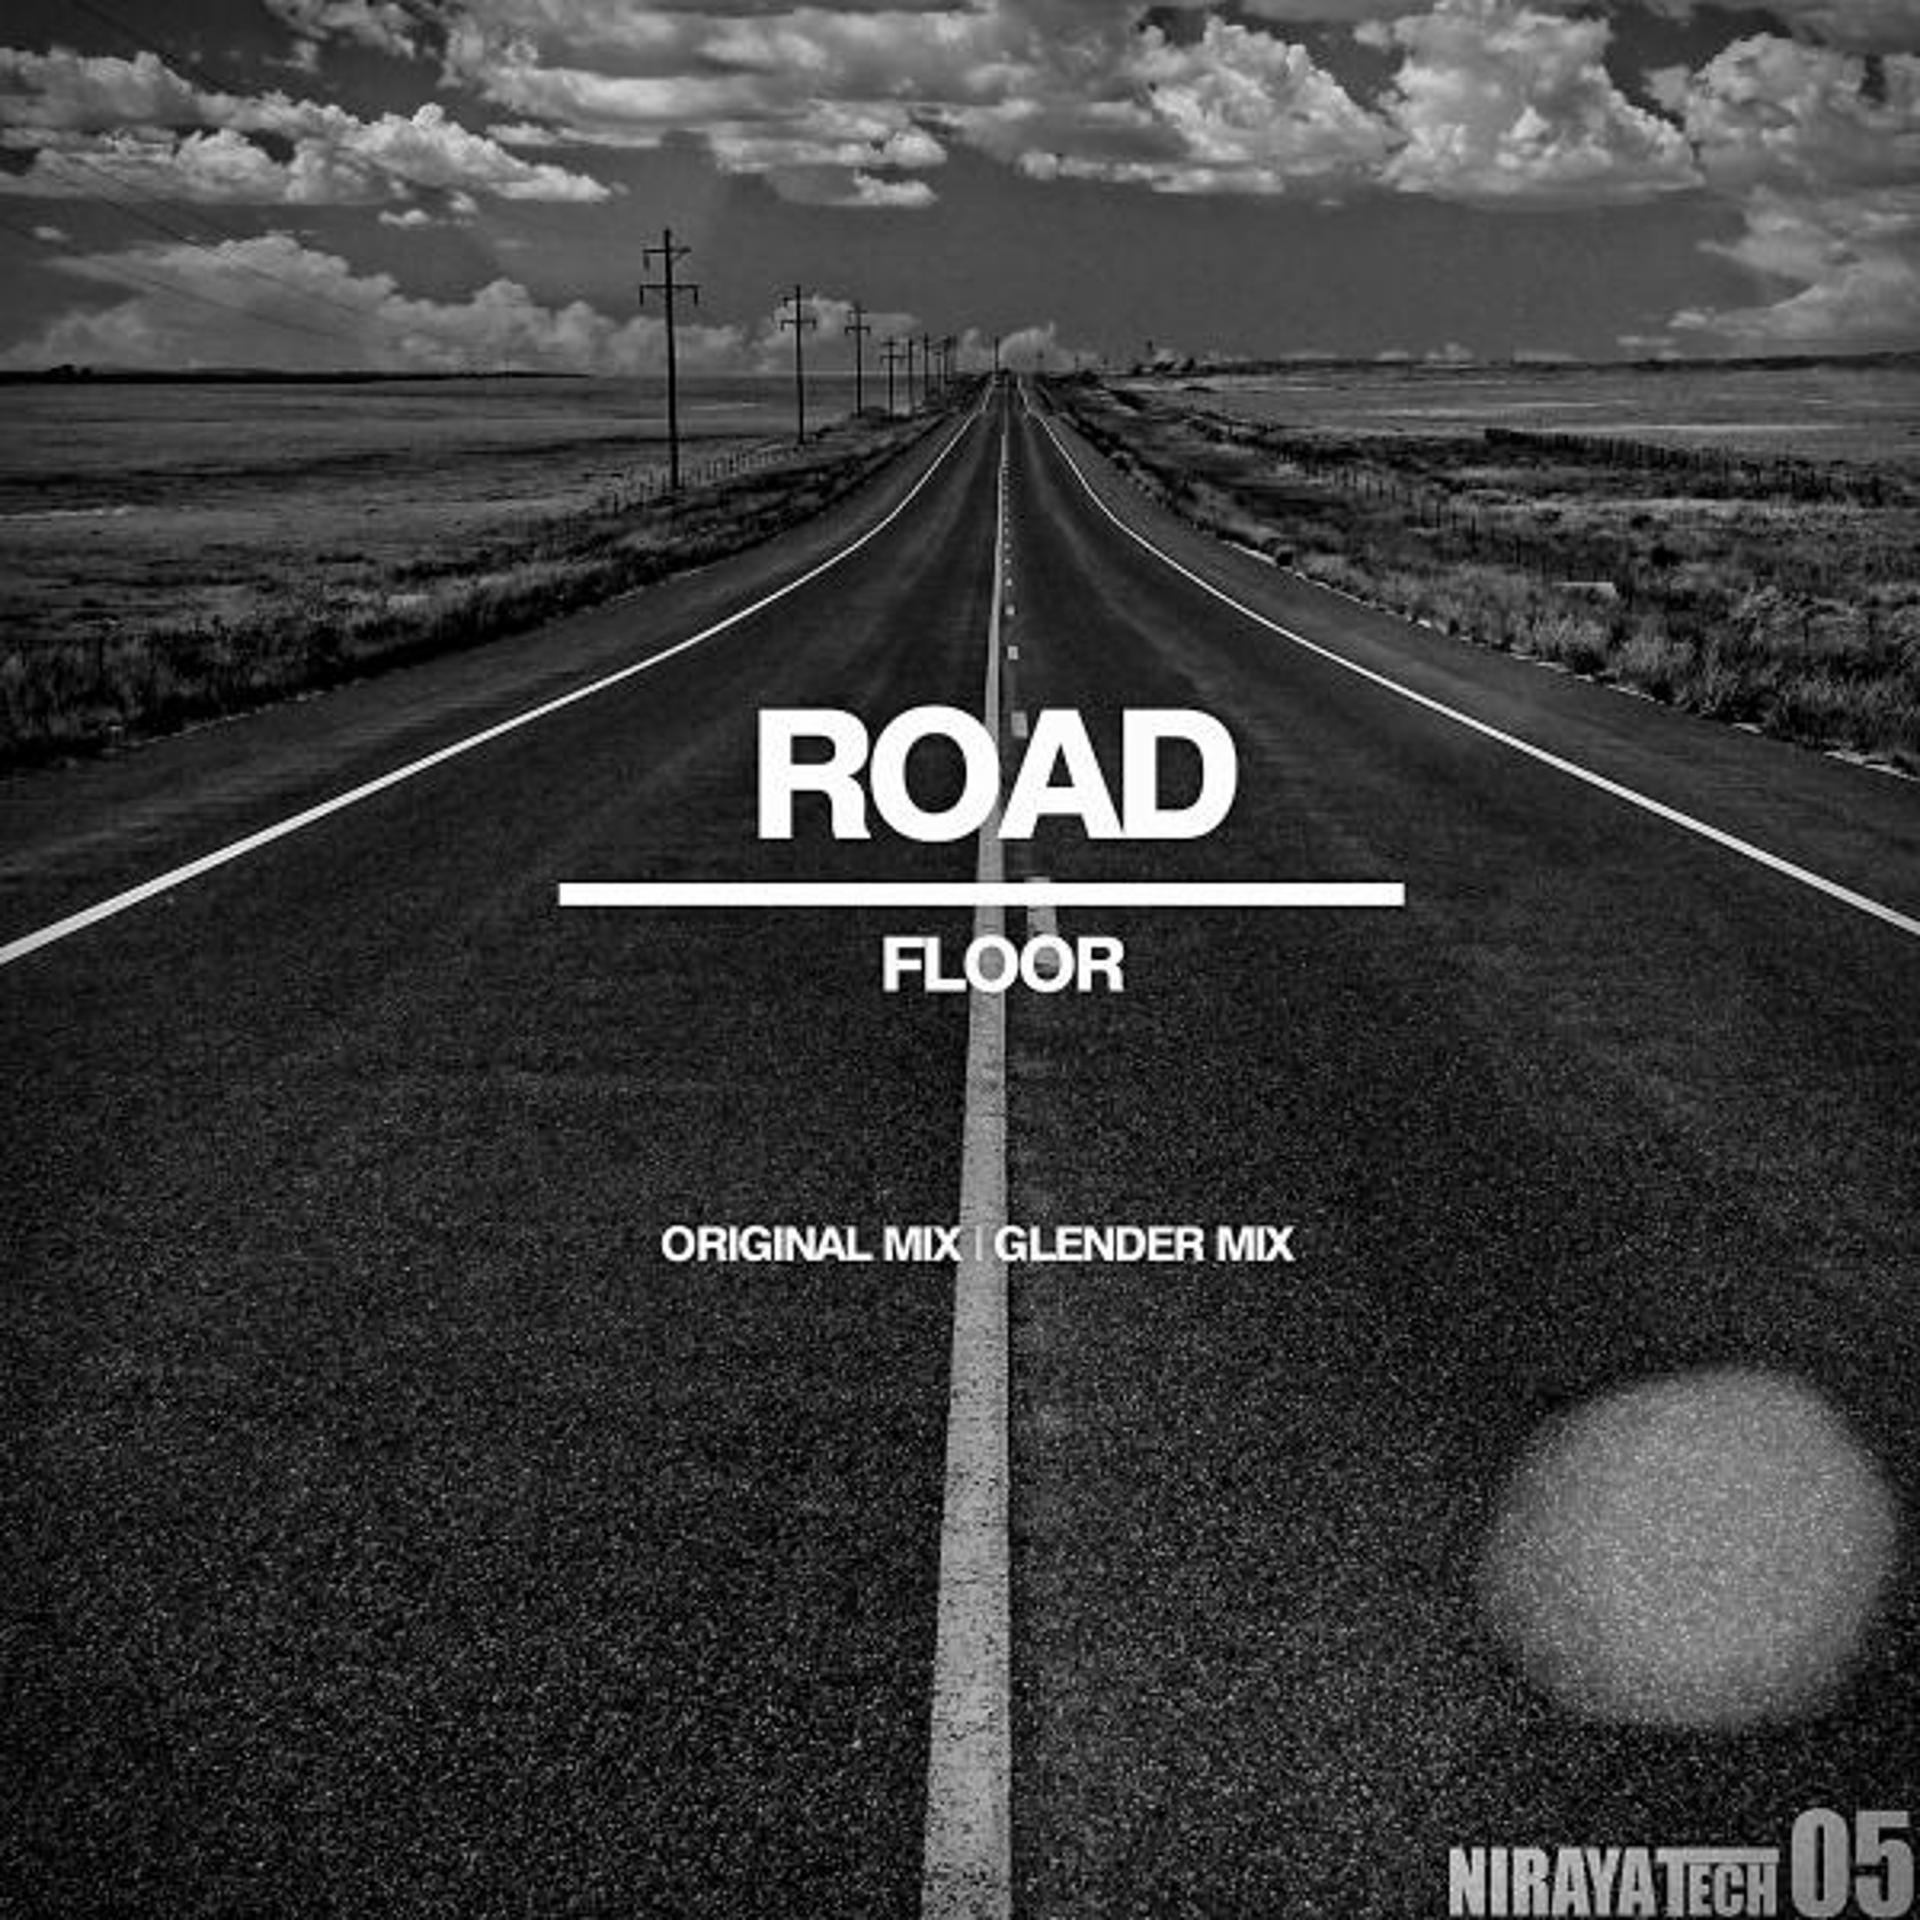 Middle of the road mp3. Original Mix. Floor Road. Rd album. Кавер из дорог.